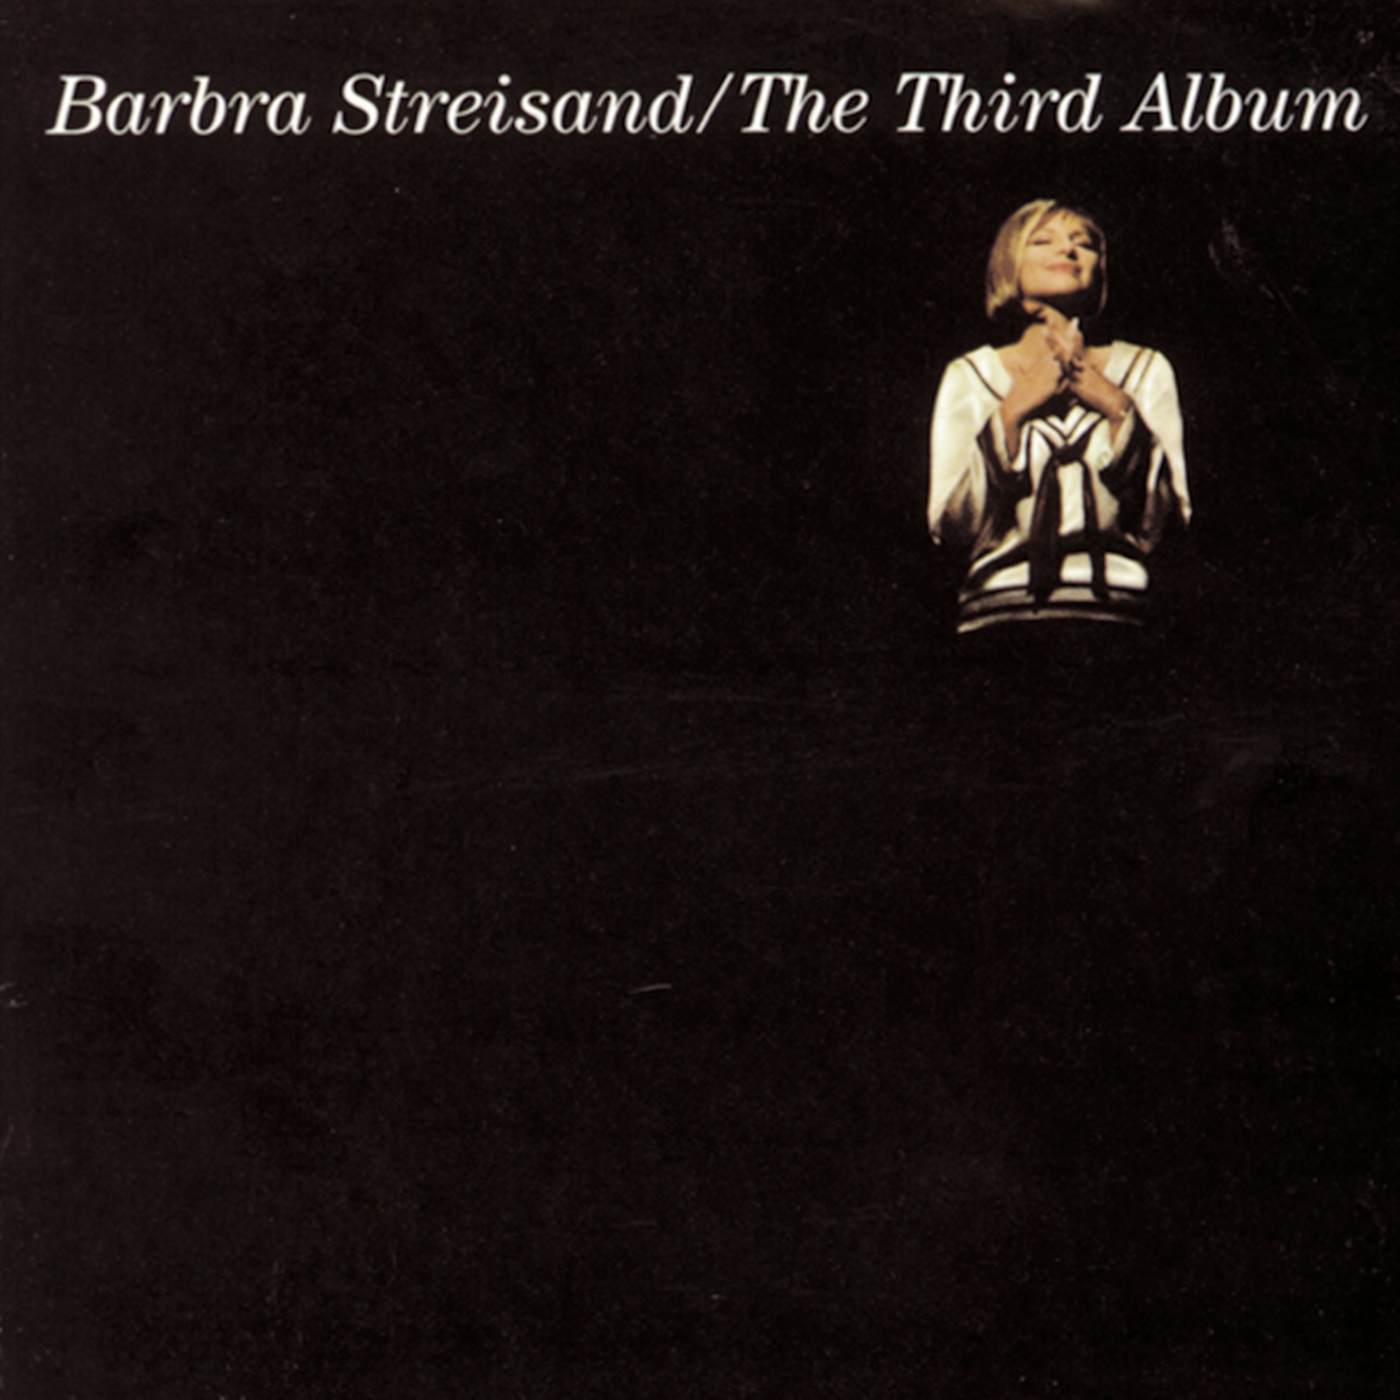 Barbra Streisand THIRD ALBUM CD